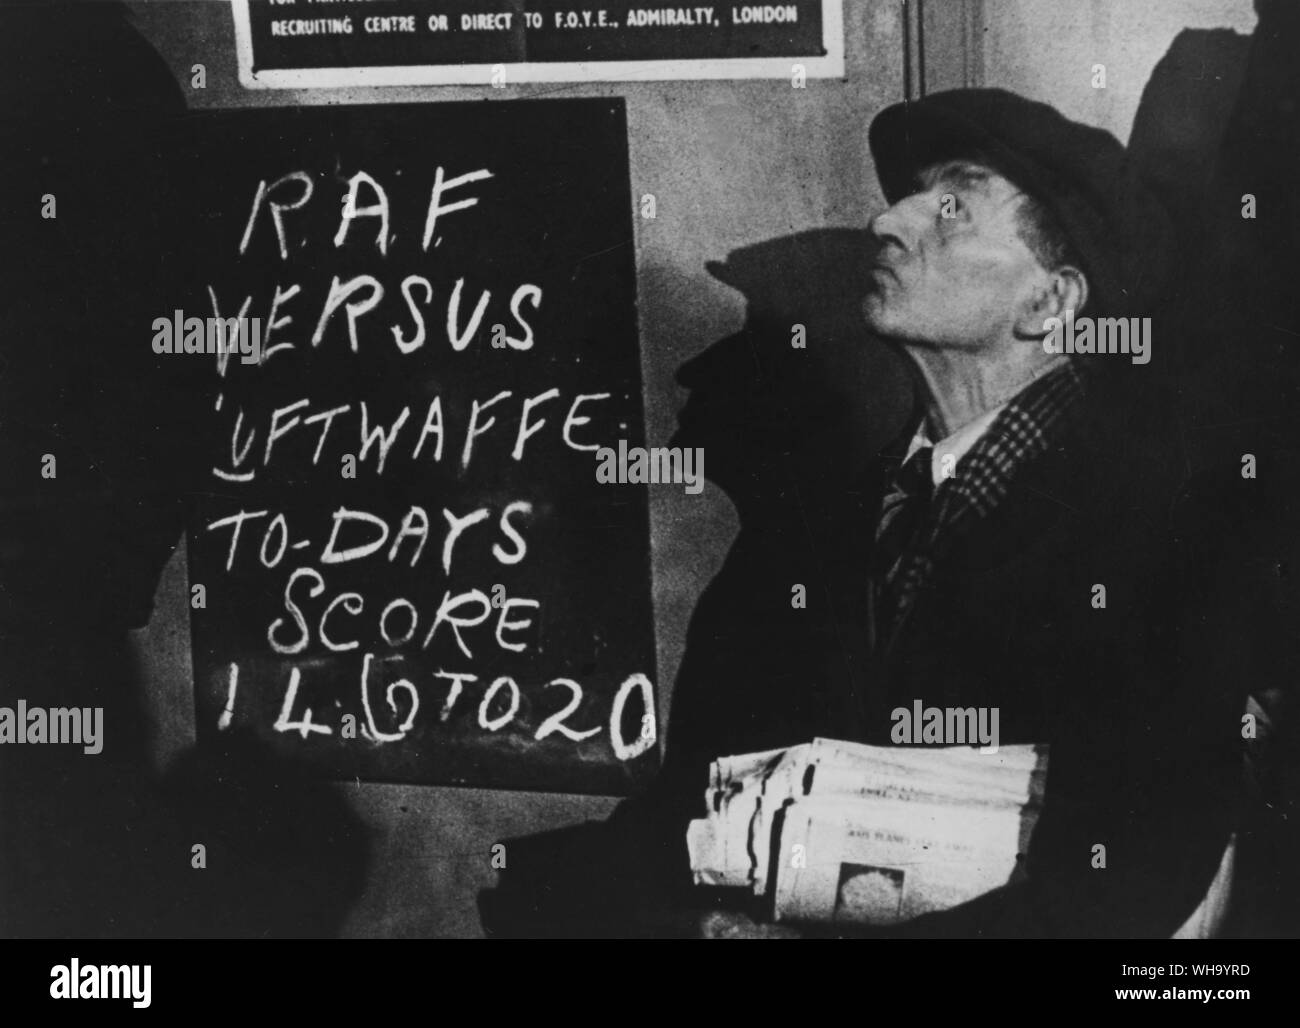 Battaglia di Bretagna: RAF versus Luftwaffe - oggi il cliente - da 146 a 20. Foto Stock